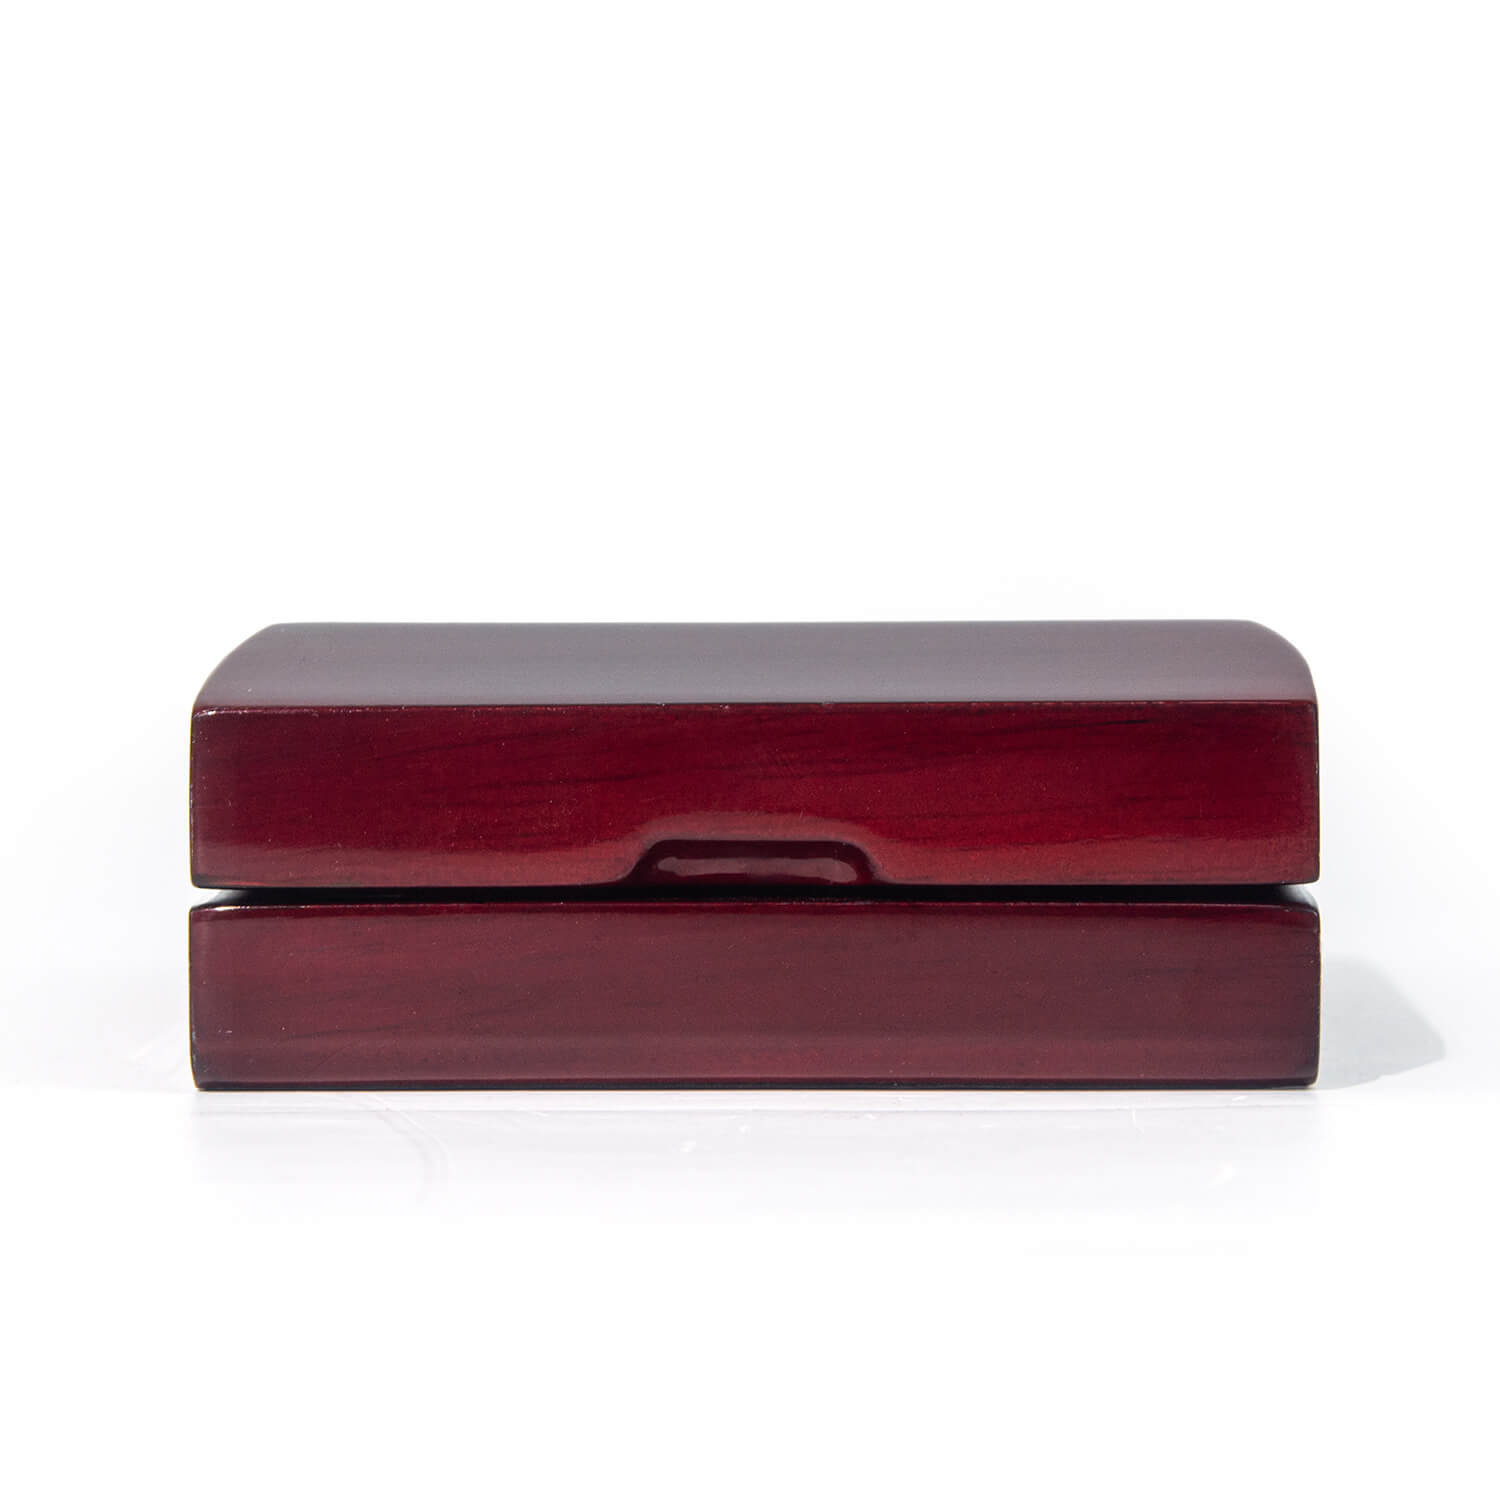 Massivholz-Ohrring-Schmuckverpackung Großhandel Luxus-Ringbox aus Holz Schmuck Geschenk-Ringverpackung Holz-Schmuckschatullen mit Logo